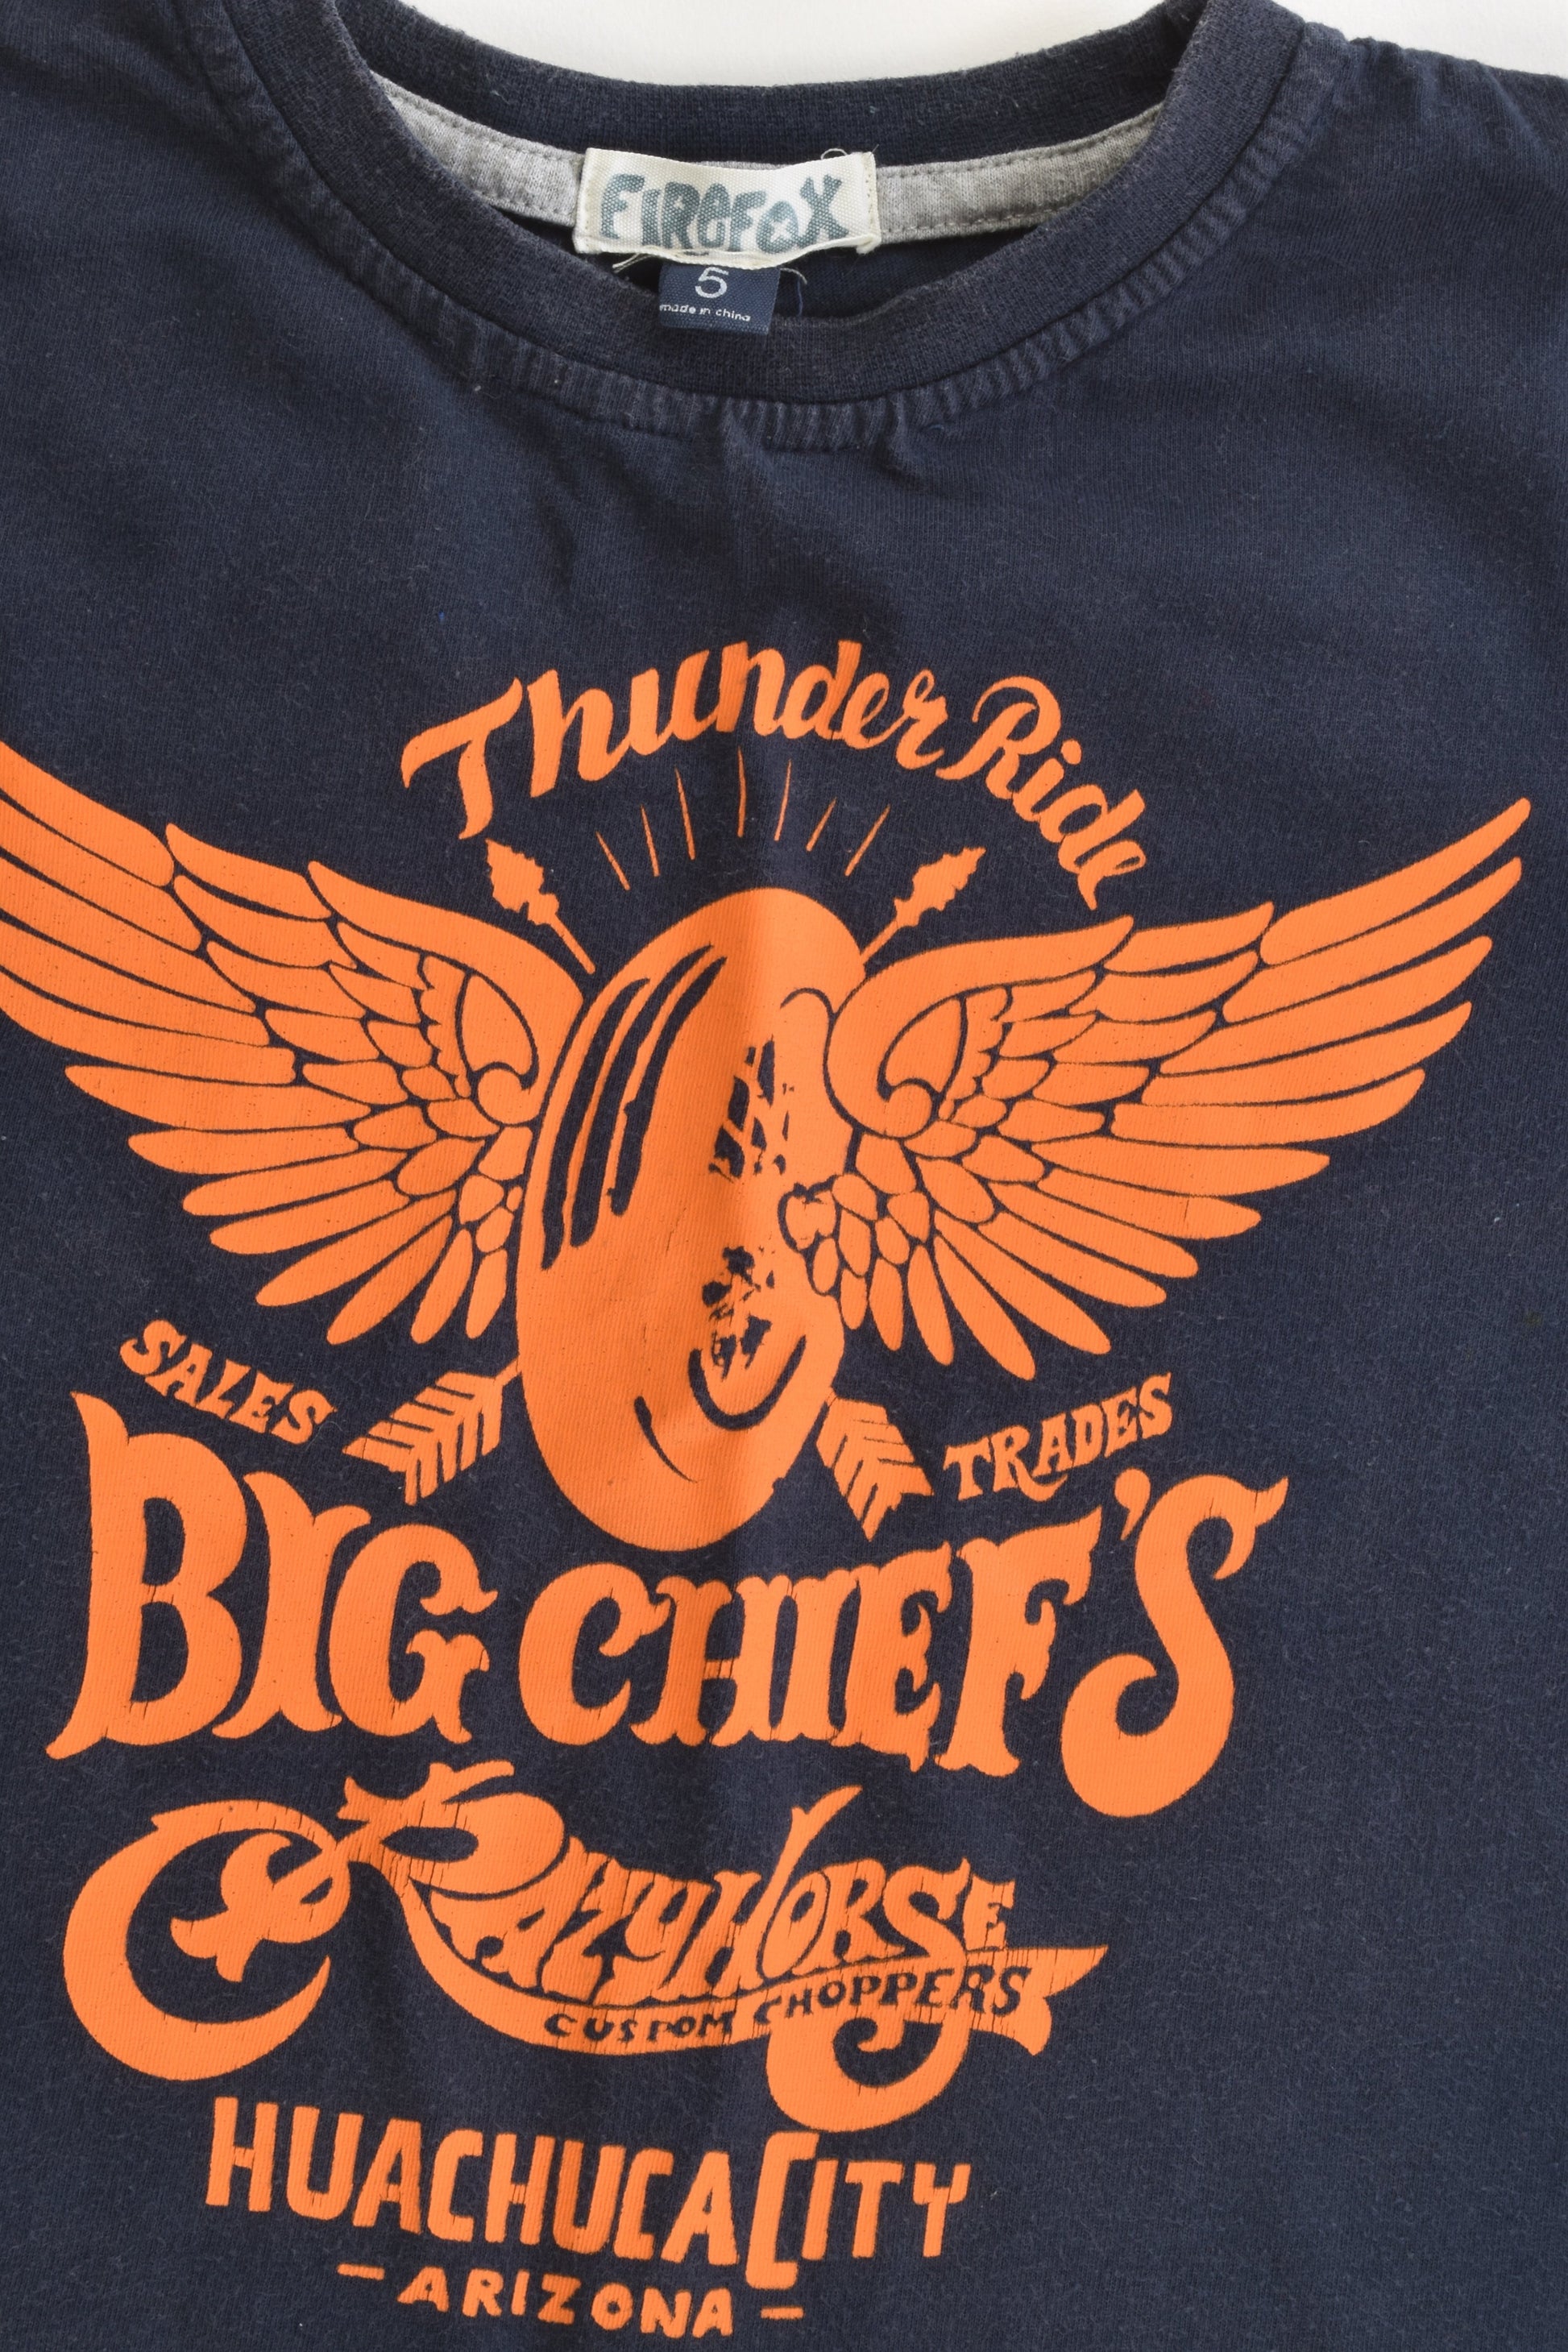 Firefox Size 5 'Thunder Ride' T-shirt